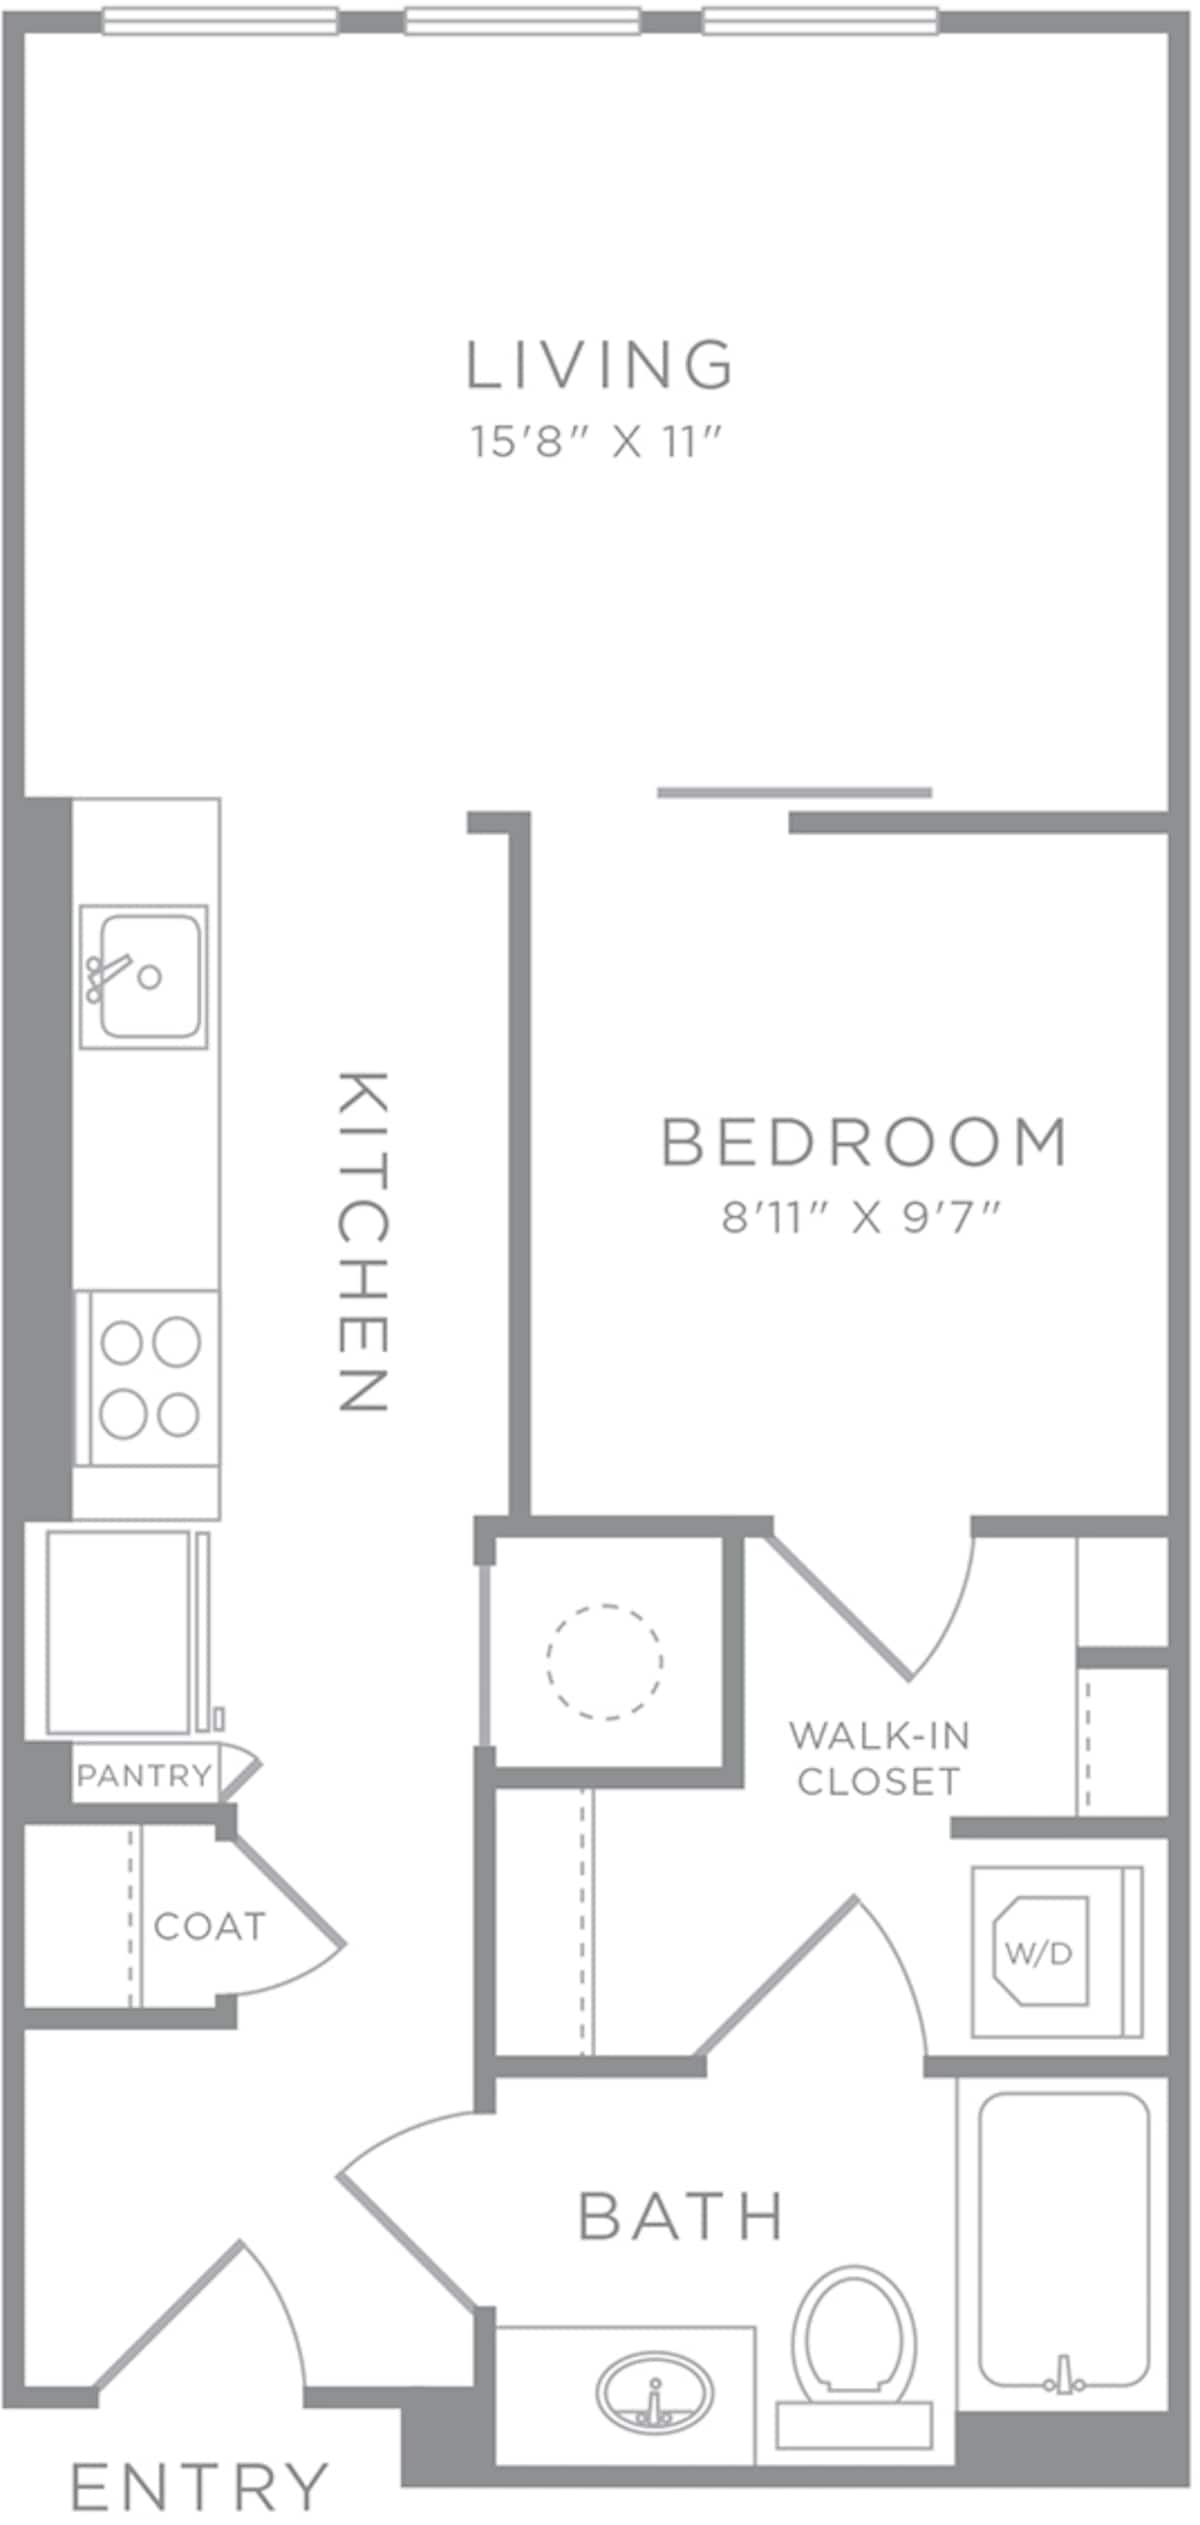 Floorplan diagram for A1.1, showing 1 bedroom